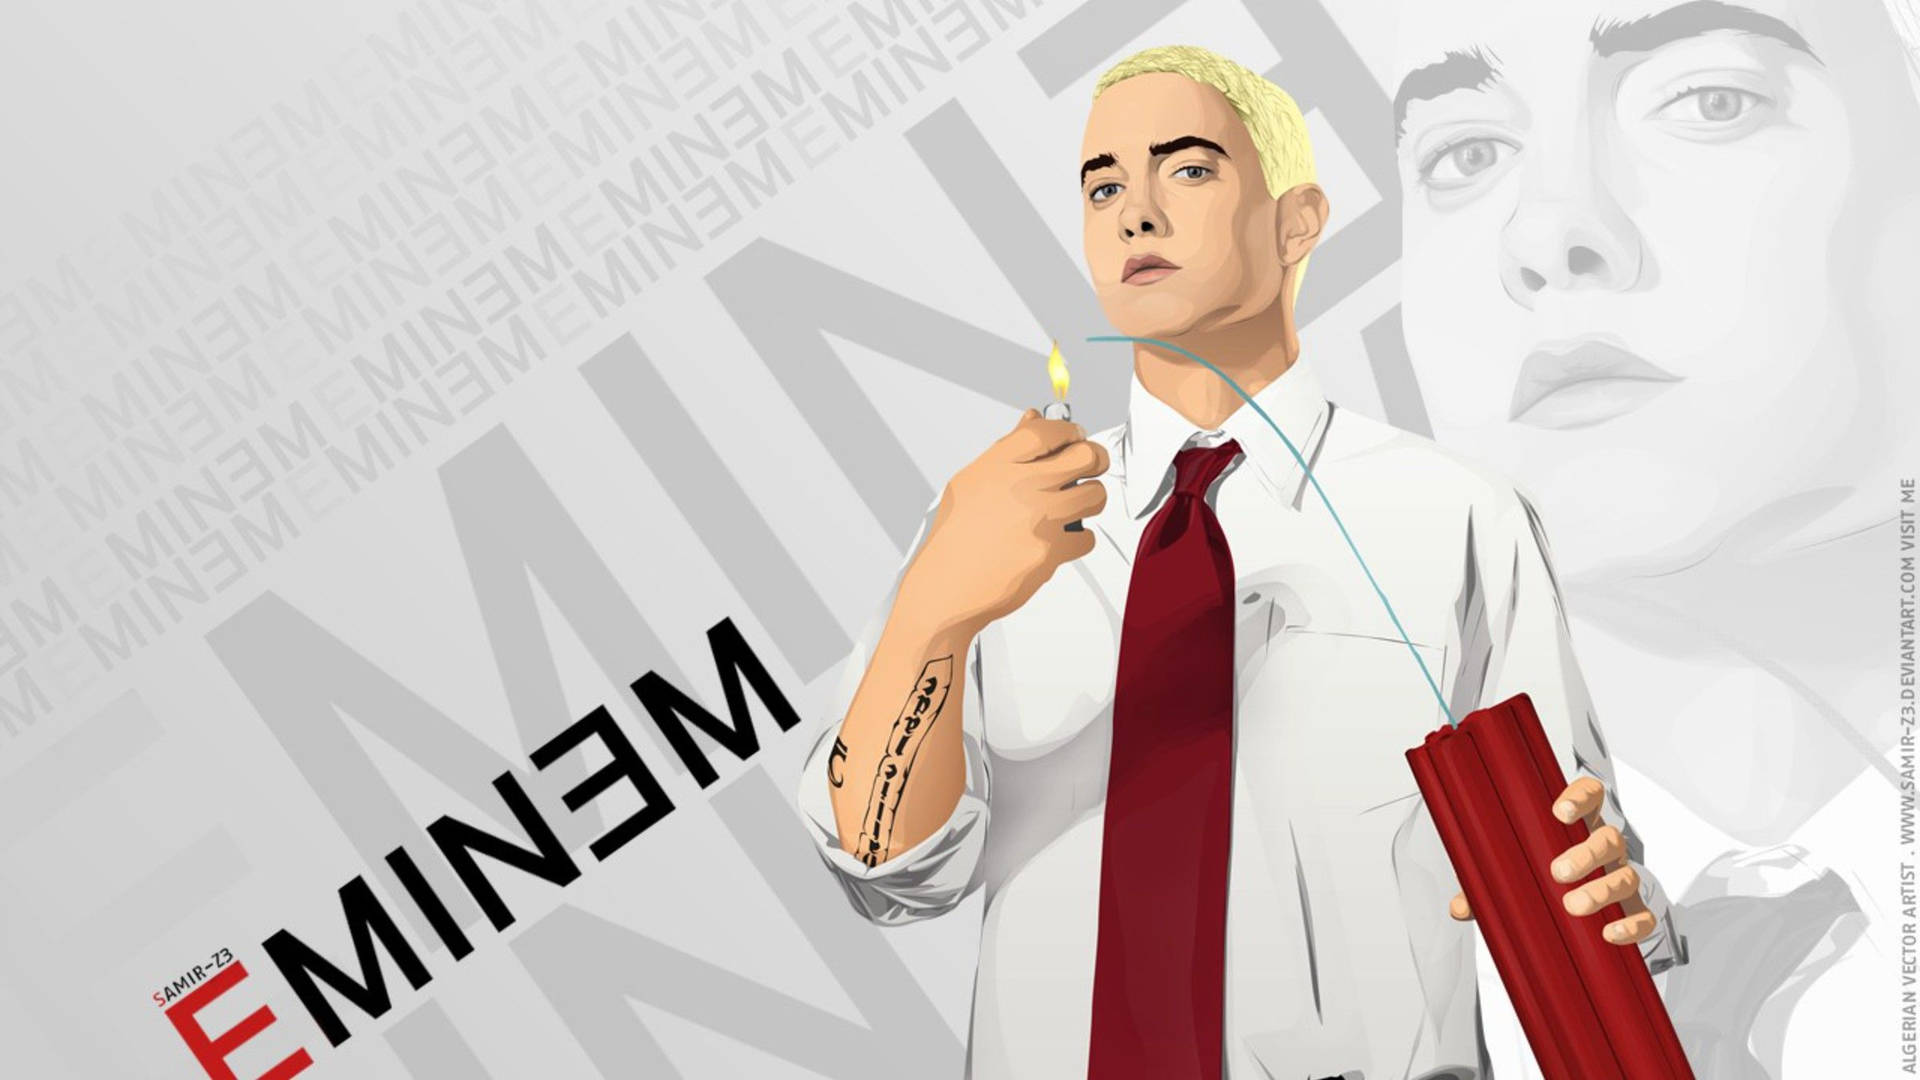 Eminem 2400X1350 Wallpaper and Background Image